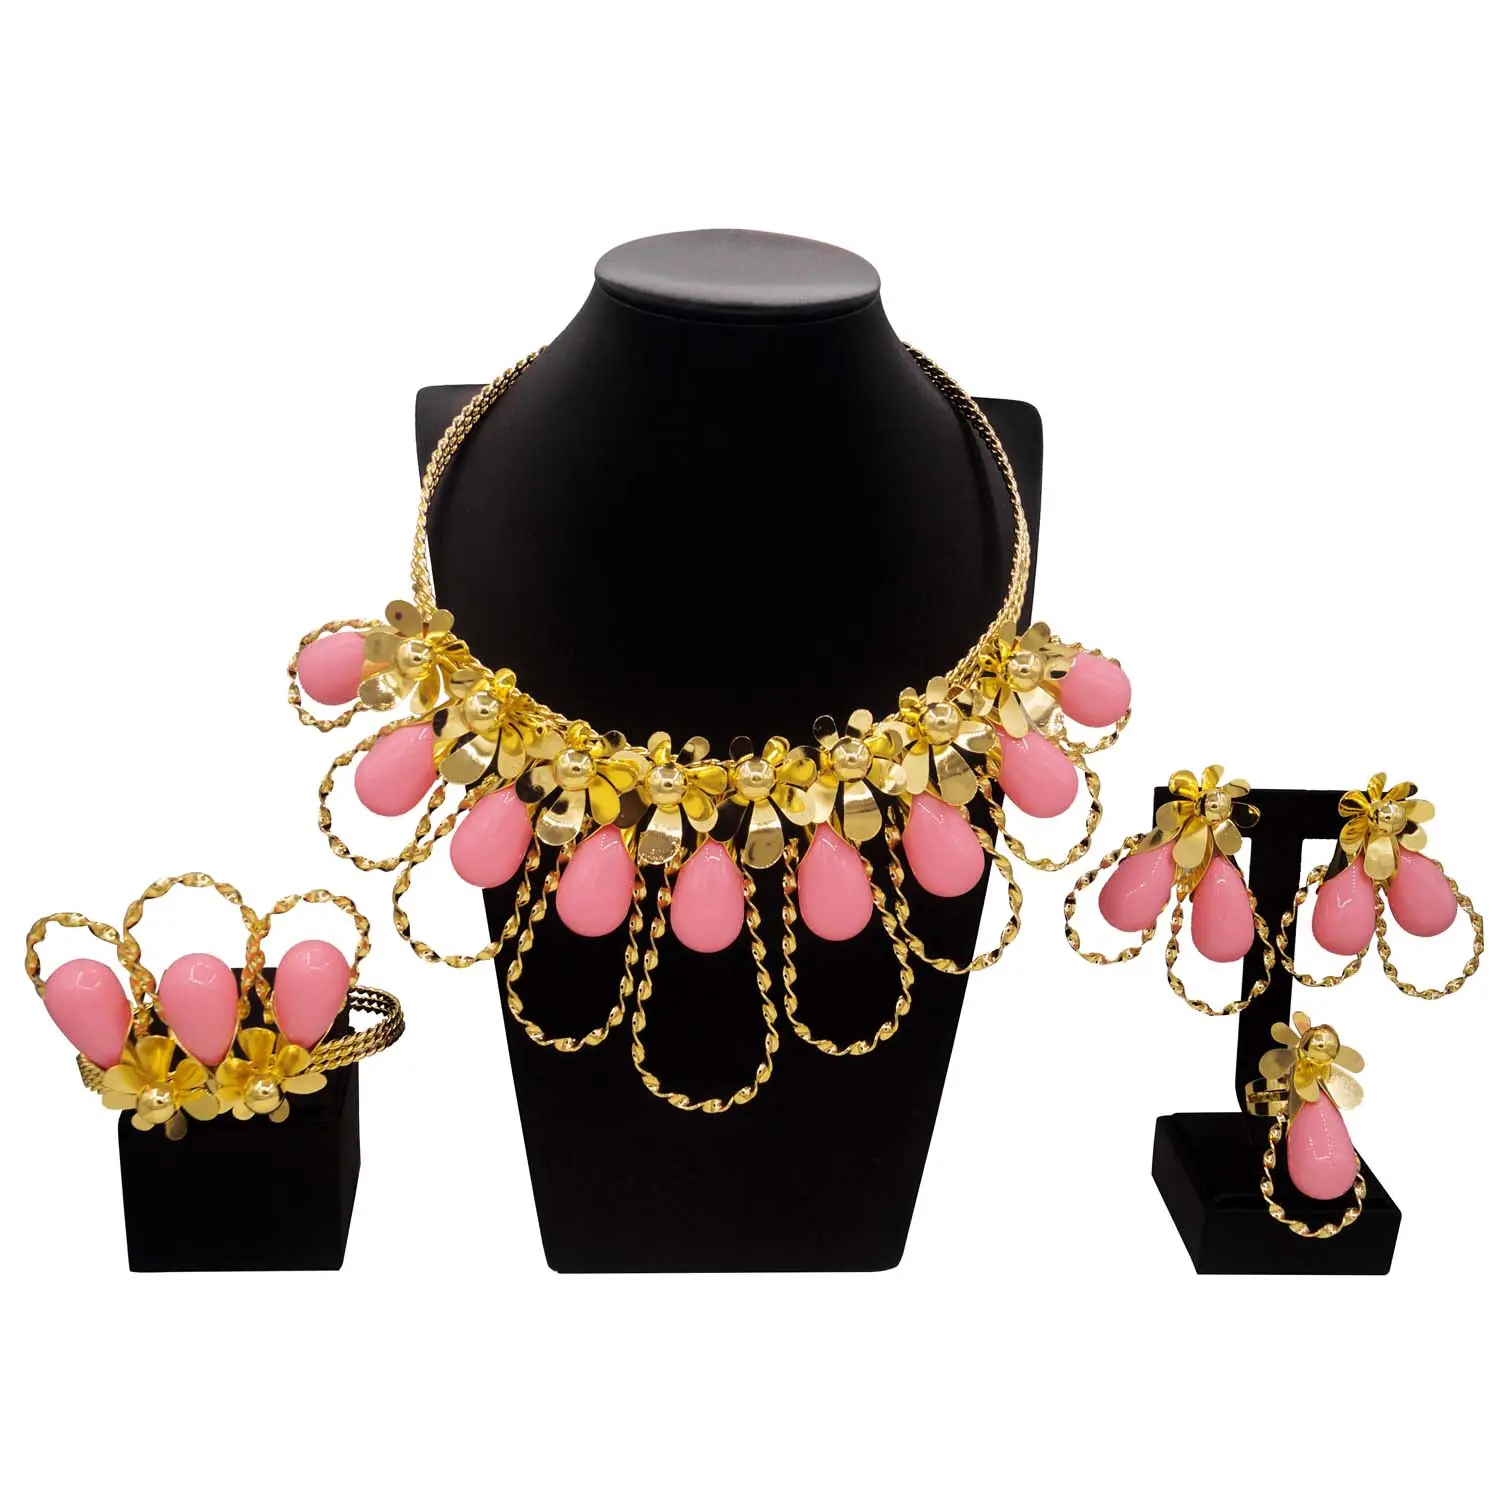 Yulaili Marke neueste 18 Karat vergoldete rosa Perlen Halskette Ohrringe Ring Schmuck Sets Mode Braut Accessoire Set brasilia nische Frau